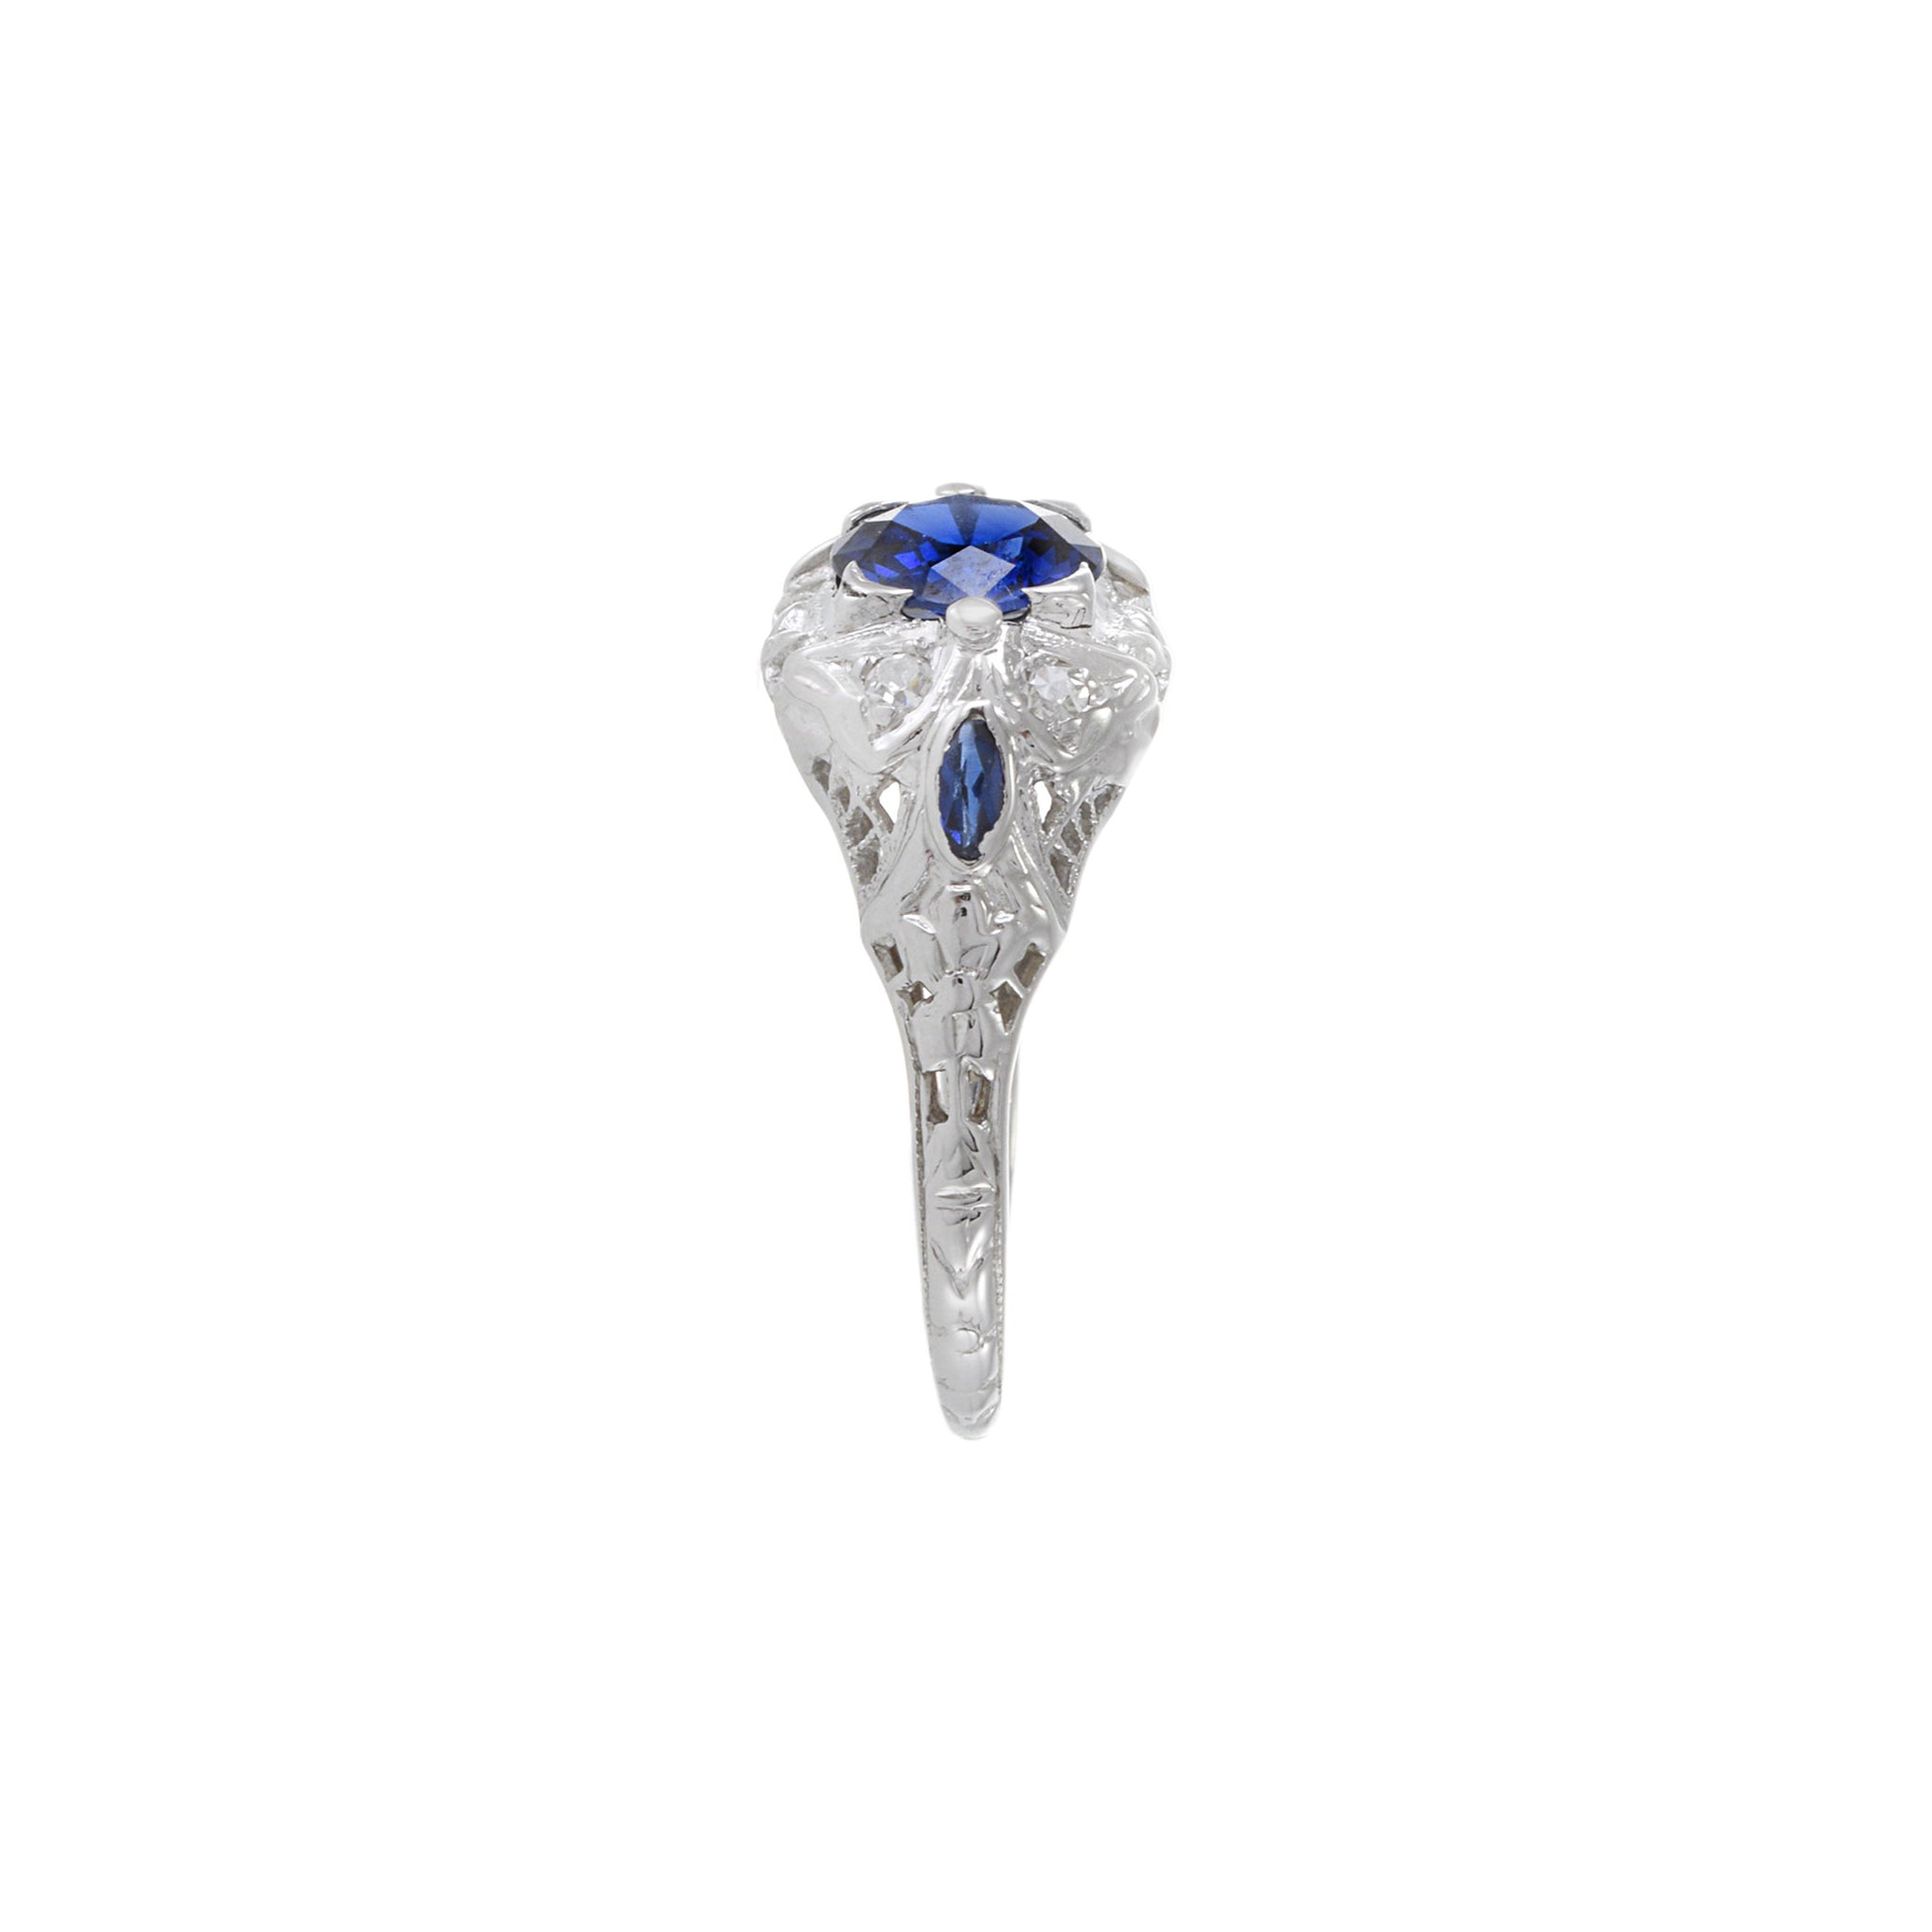 Estate Art Deco 18KT White Gold Sapphire And Diamond Ring